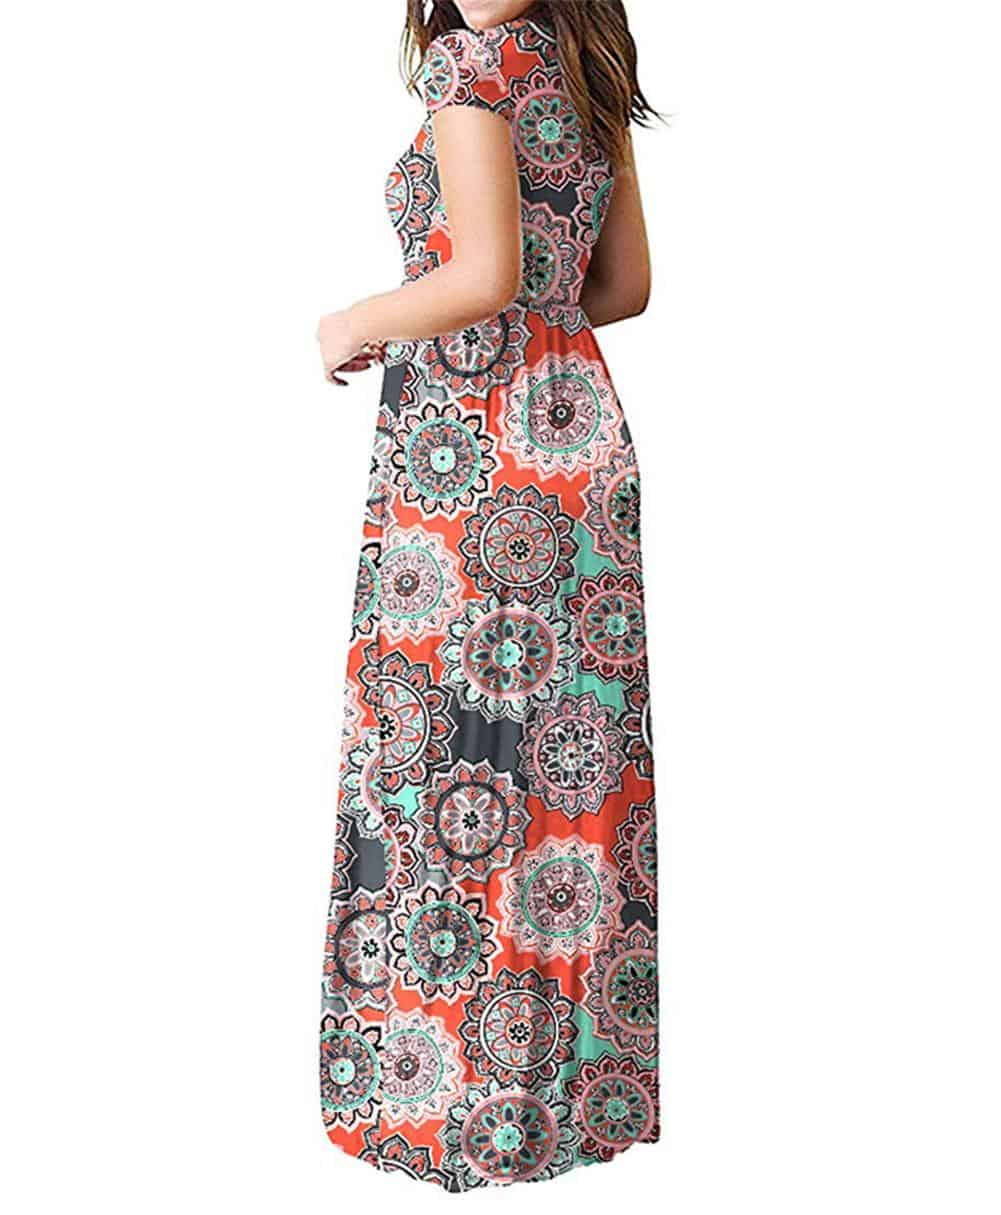 Women Short Sleeve Boho Floral Long Dress Kaftan Ladies Summer Party Maxi Dresses Holiday Plus Size S-2XL